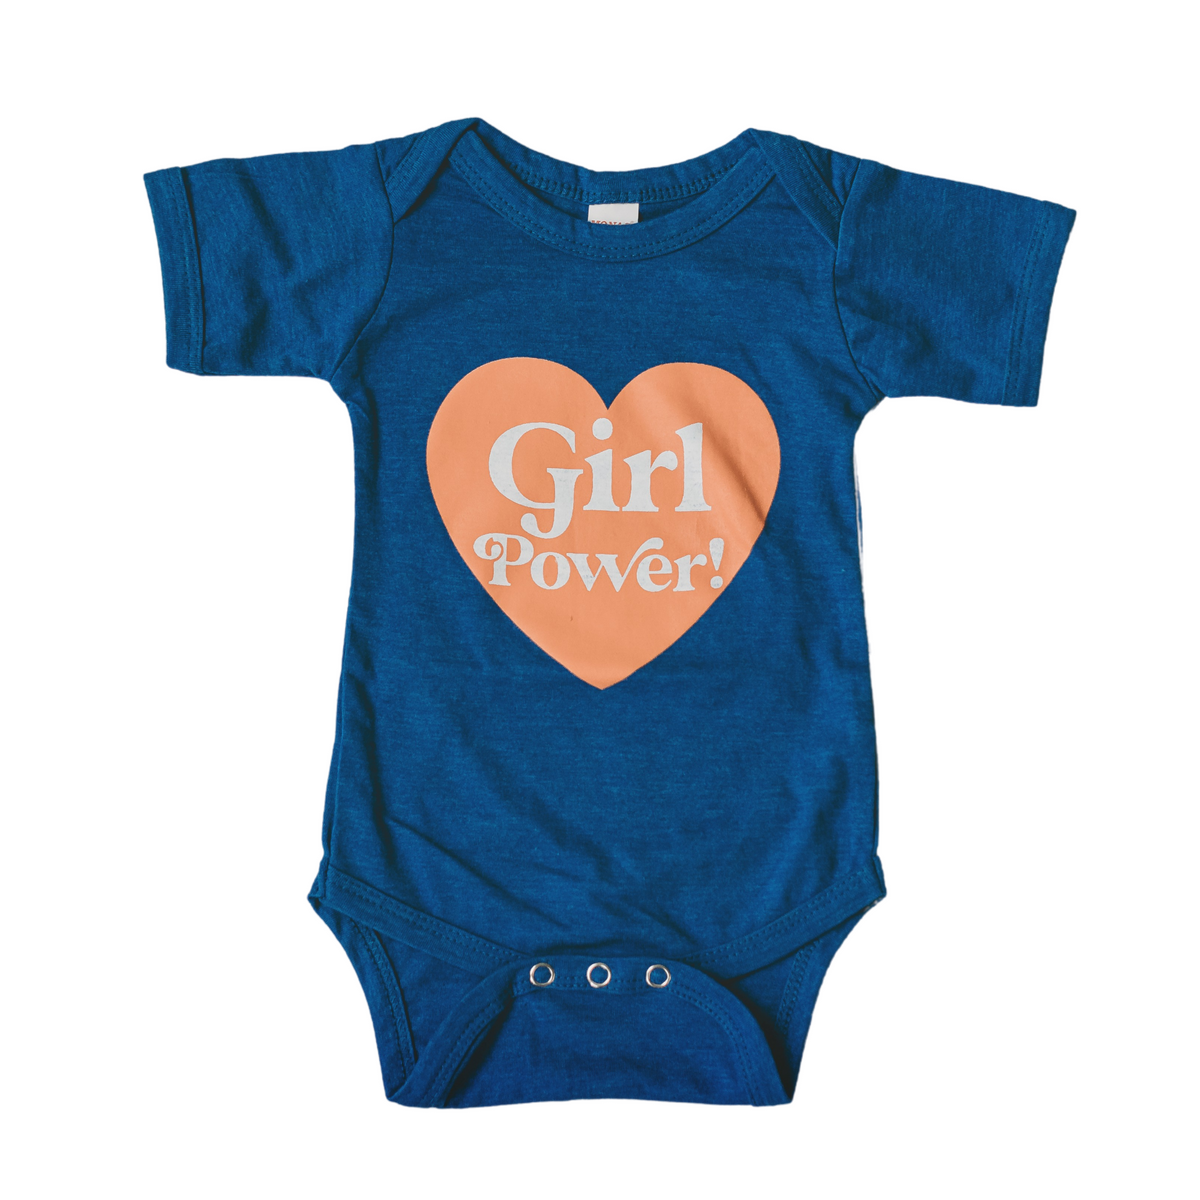 Girl Power baby bodysuit - 10% sales donated to Girls INC.